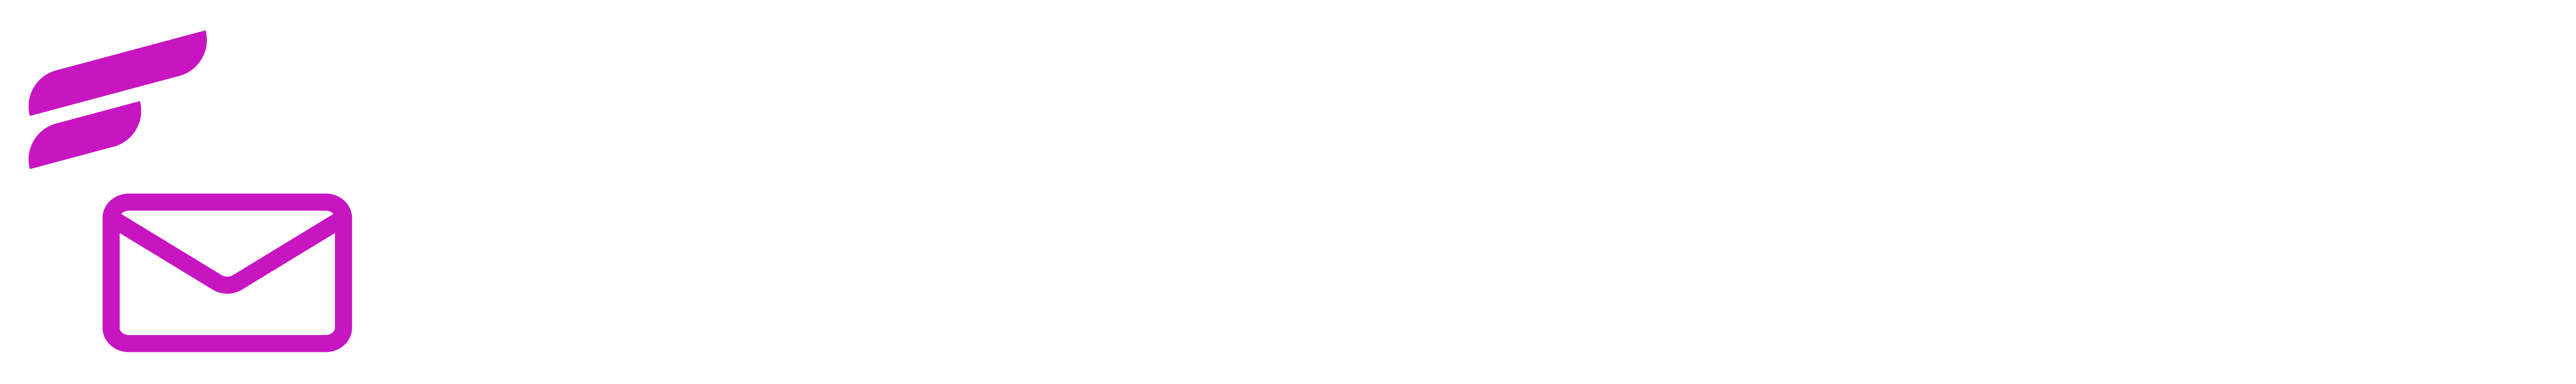 fluentcrm logo tagline color white